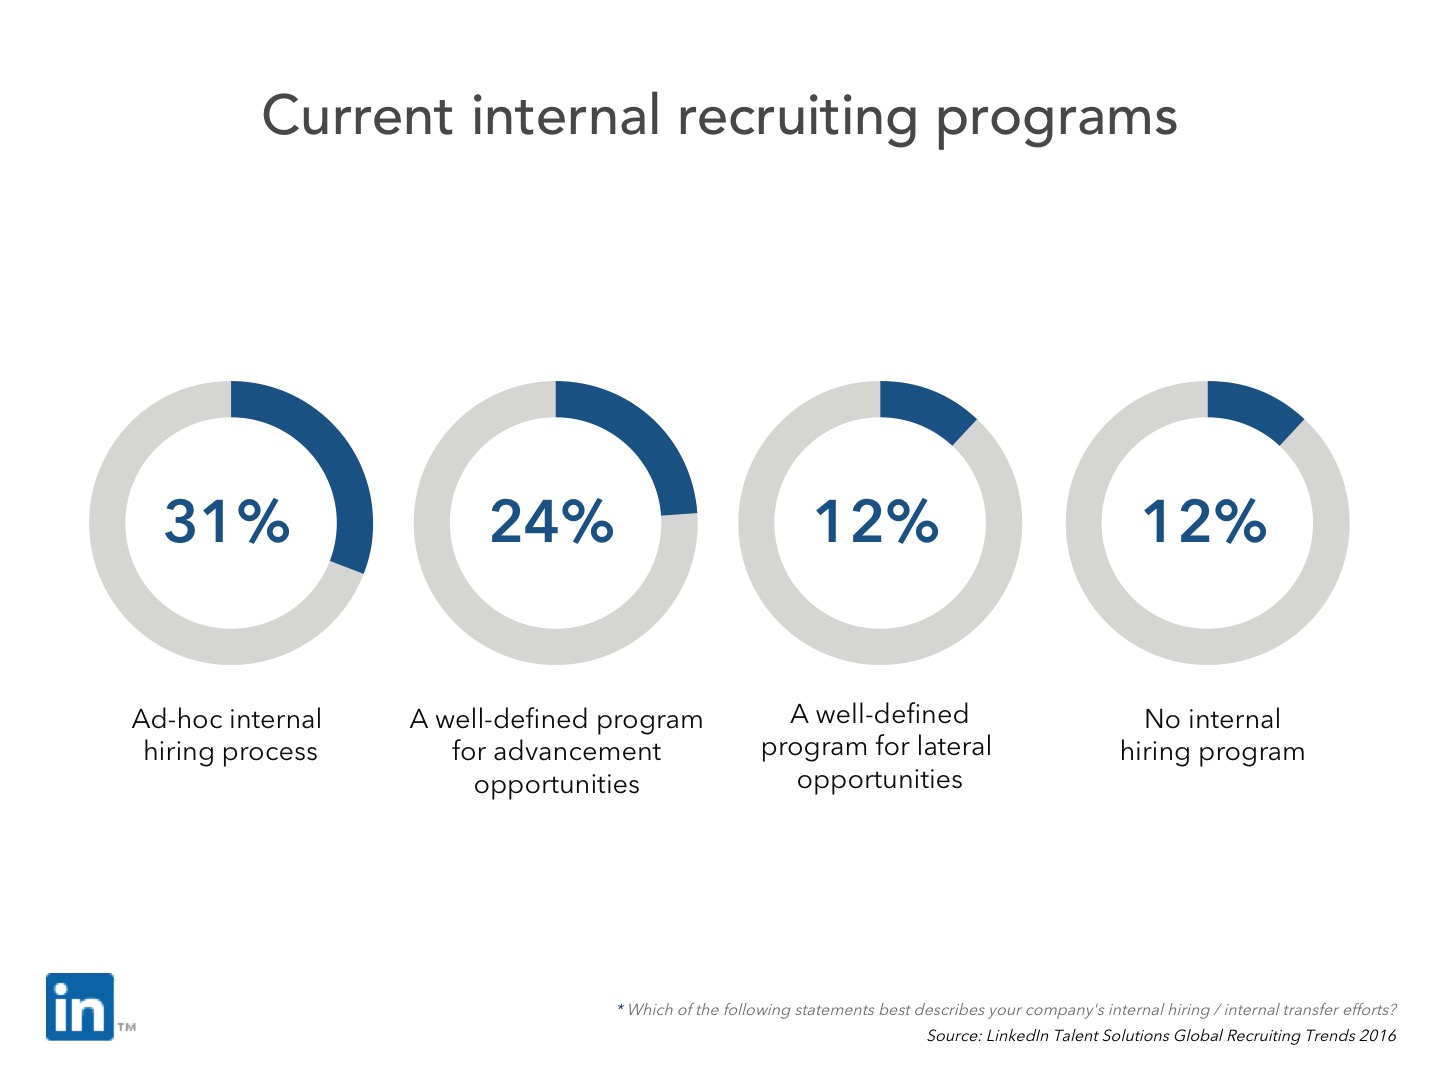  Internal recruiting programs